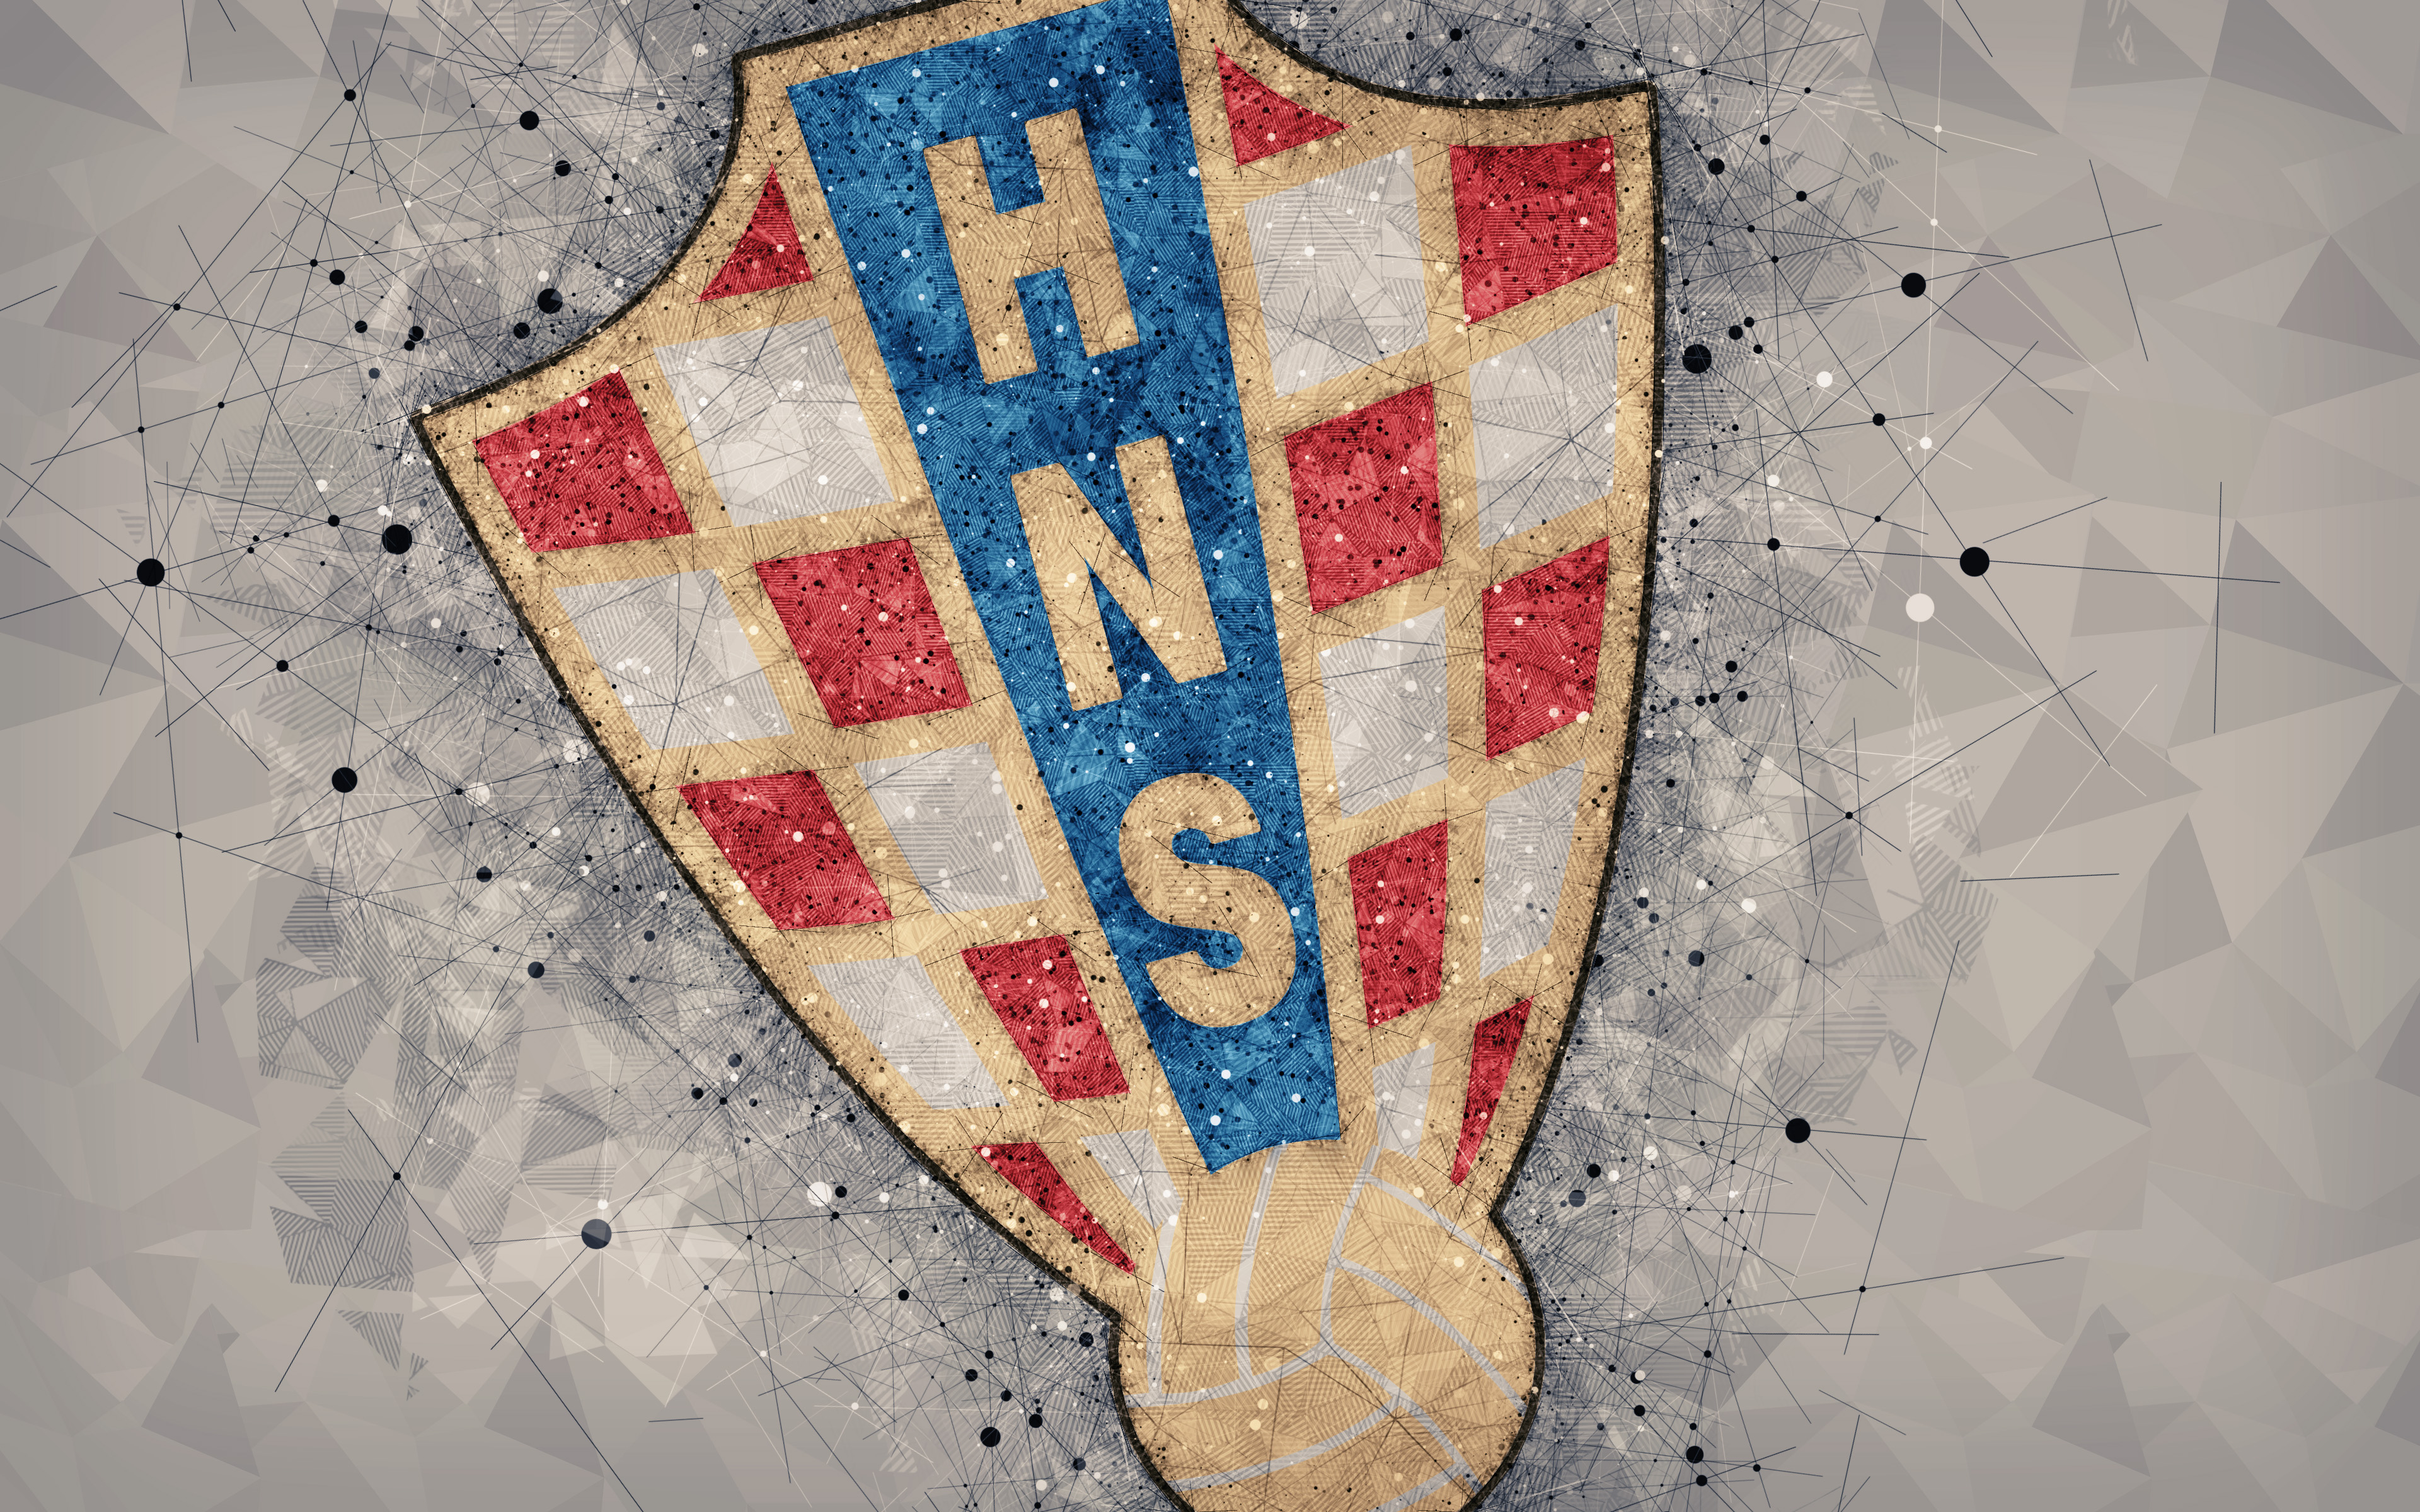 Croatia National Football Team 4k Ultra HD Wallpaper Background